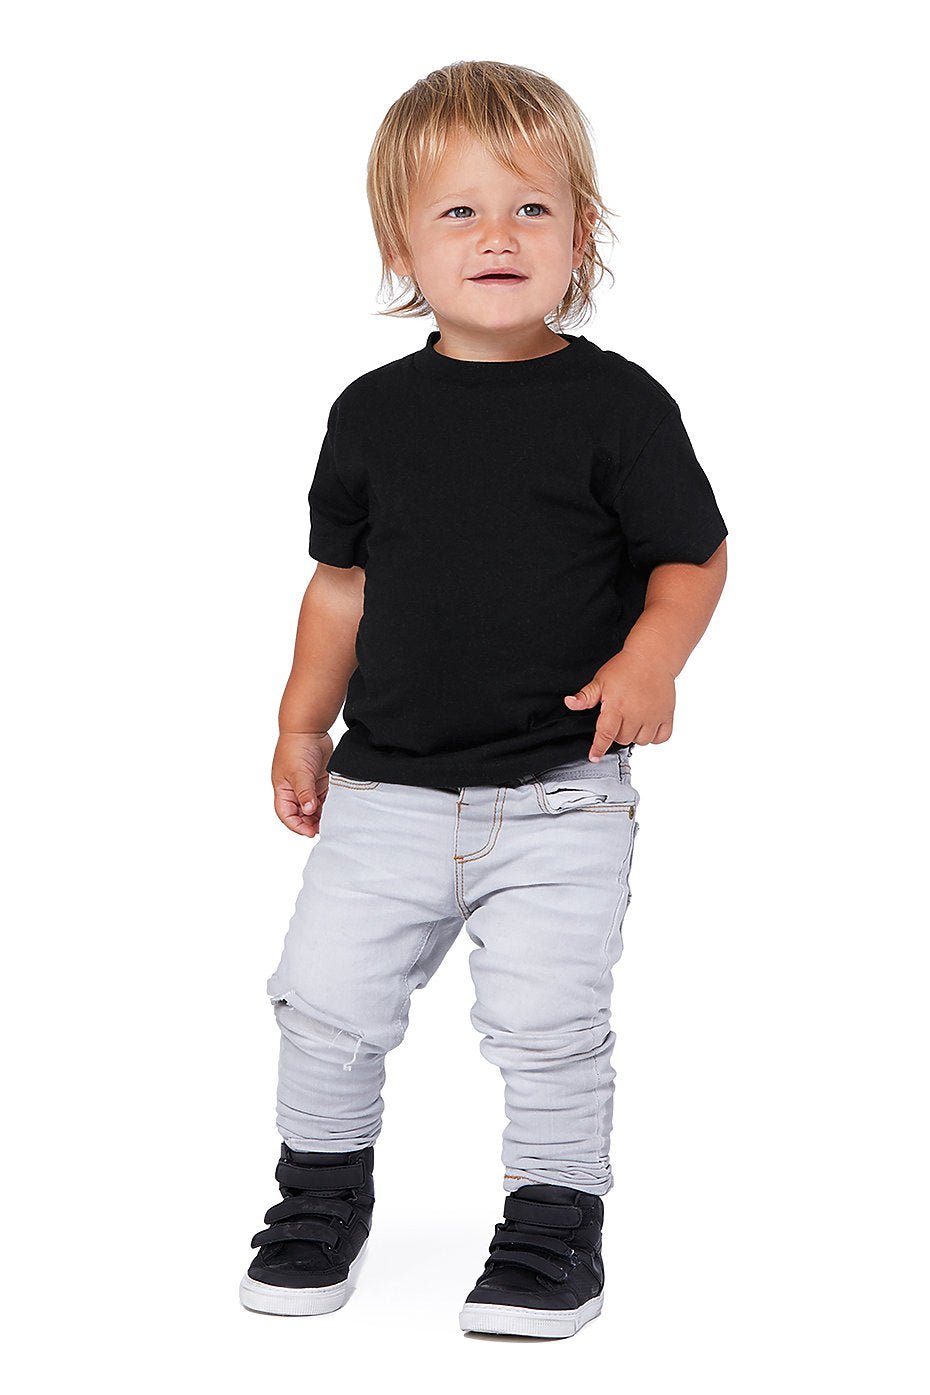 Blank Toddler T-shirt / Unisex Toddler / Bella canvas - Transfer Kingdom